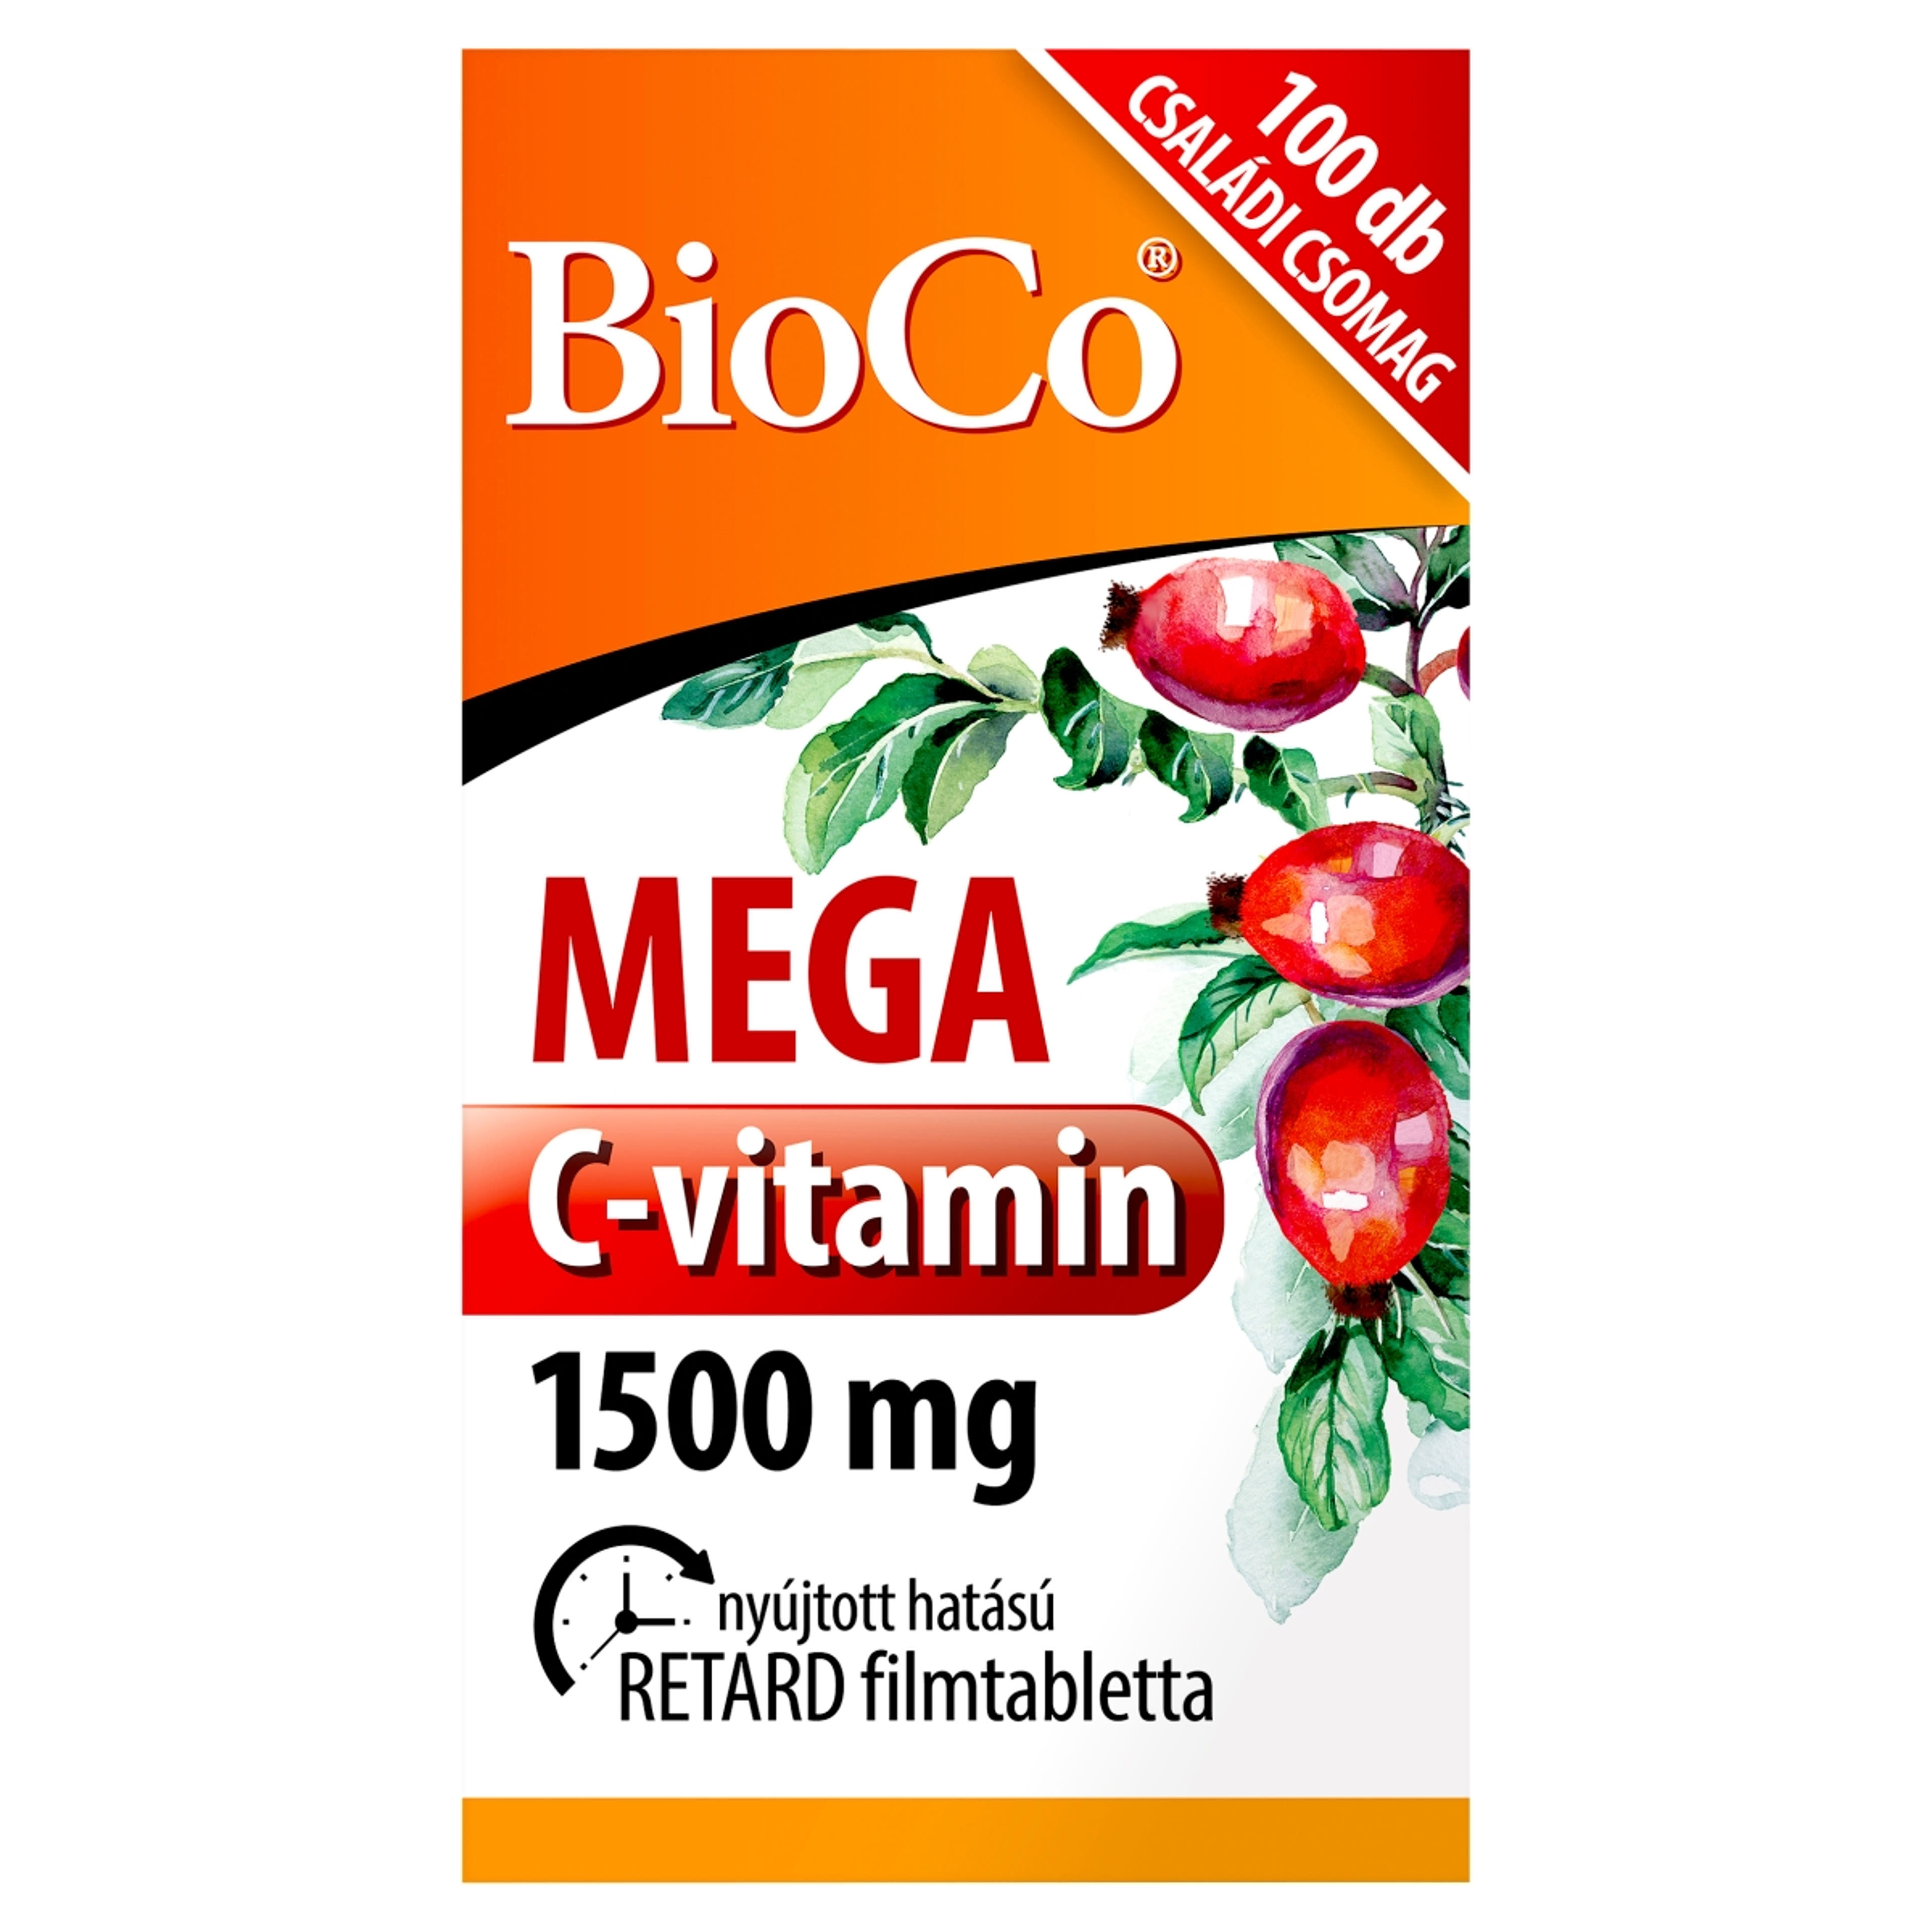 Bioco Mega C-vitamin étrendkiegészítő tabletta - 100 db-1